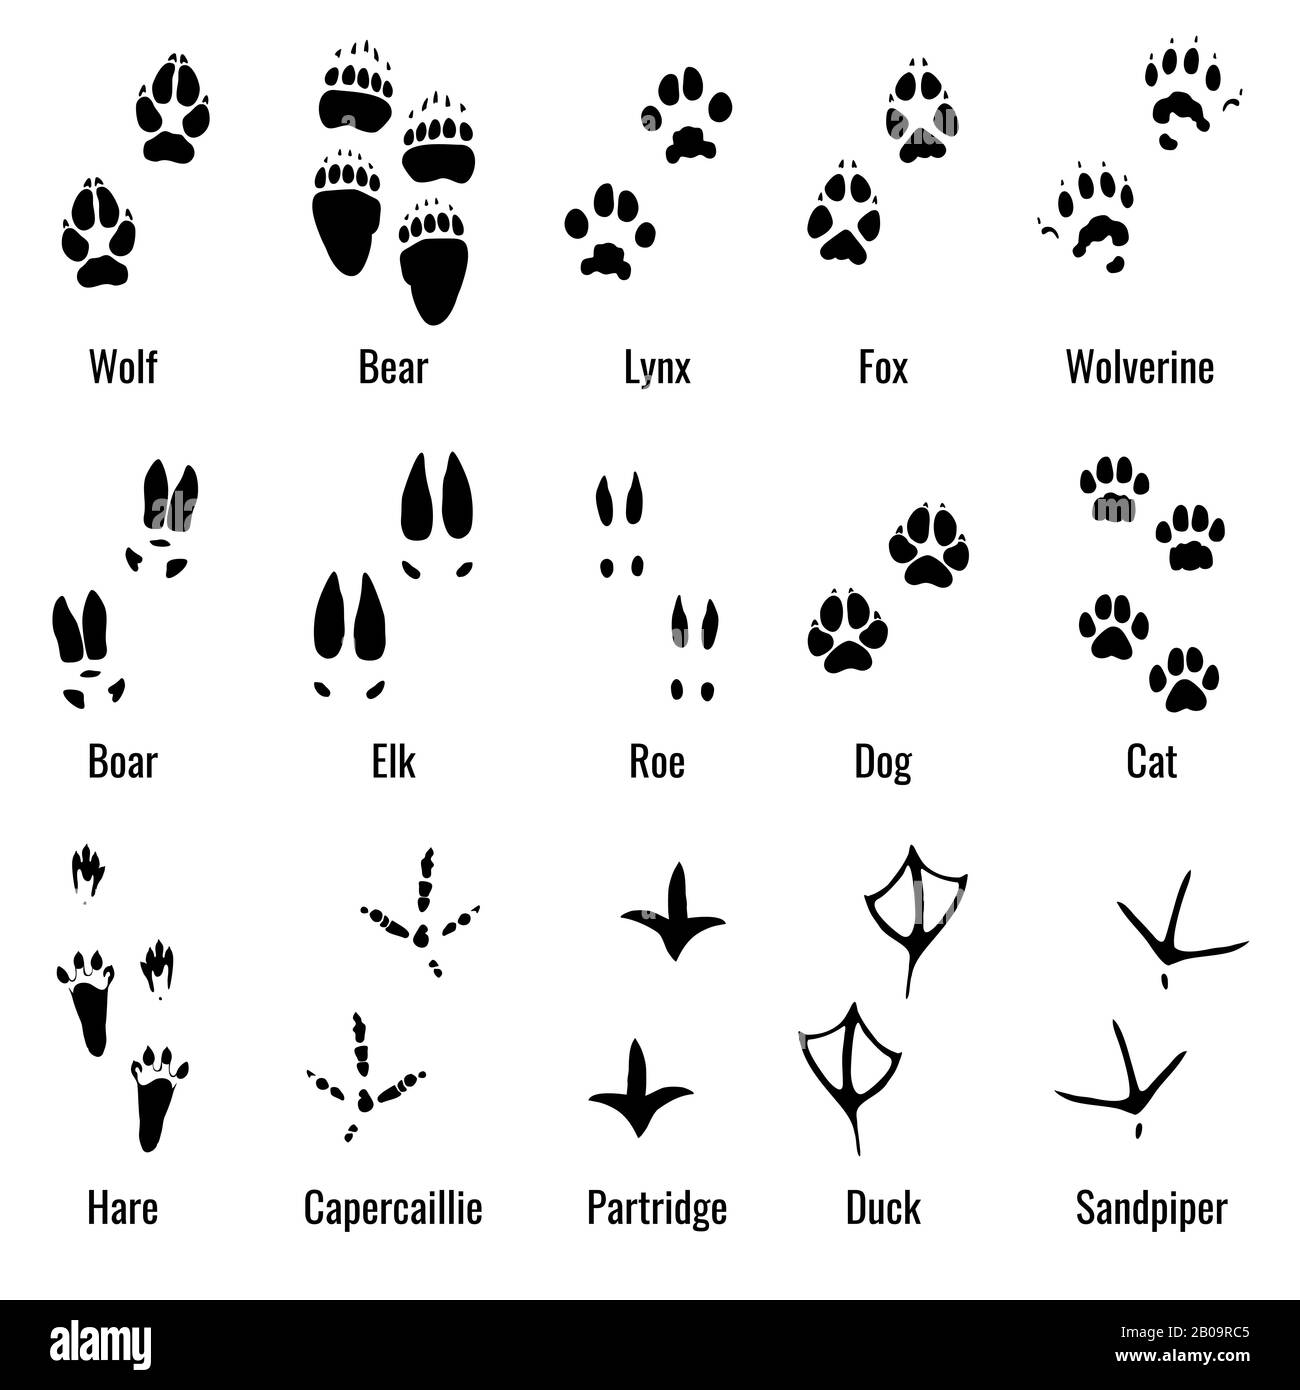 Huella animal, pata de perro, huellas, diverso, animales, mascota